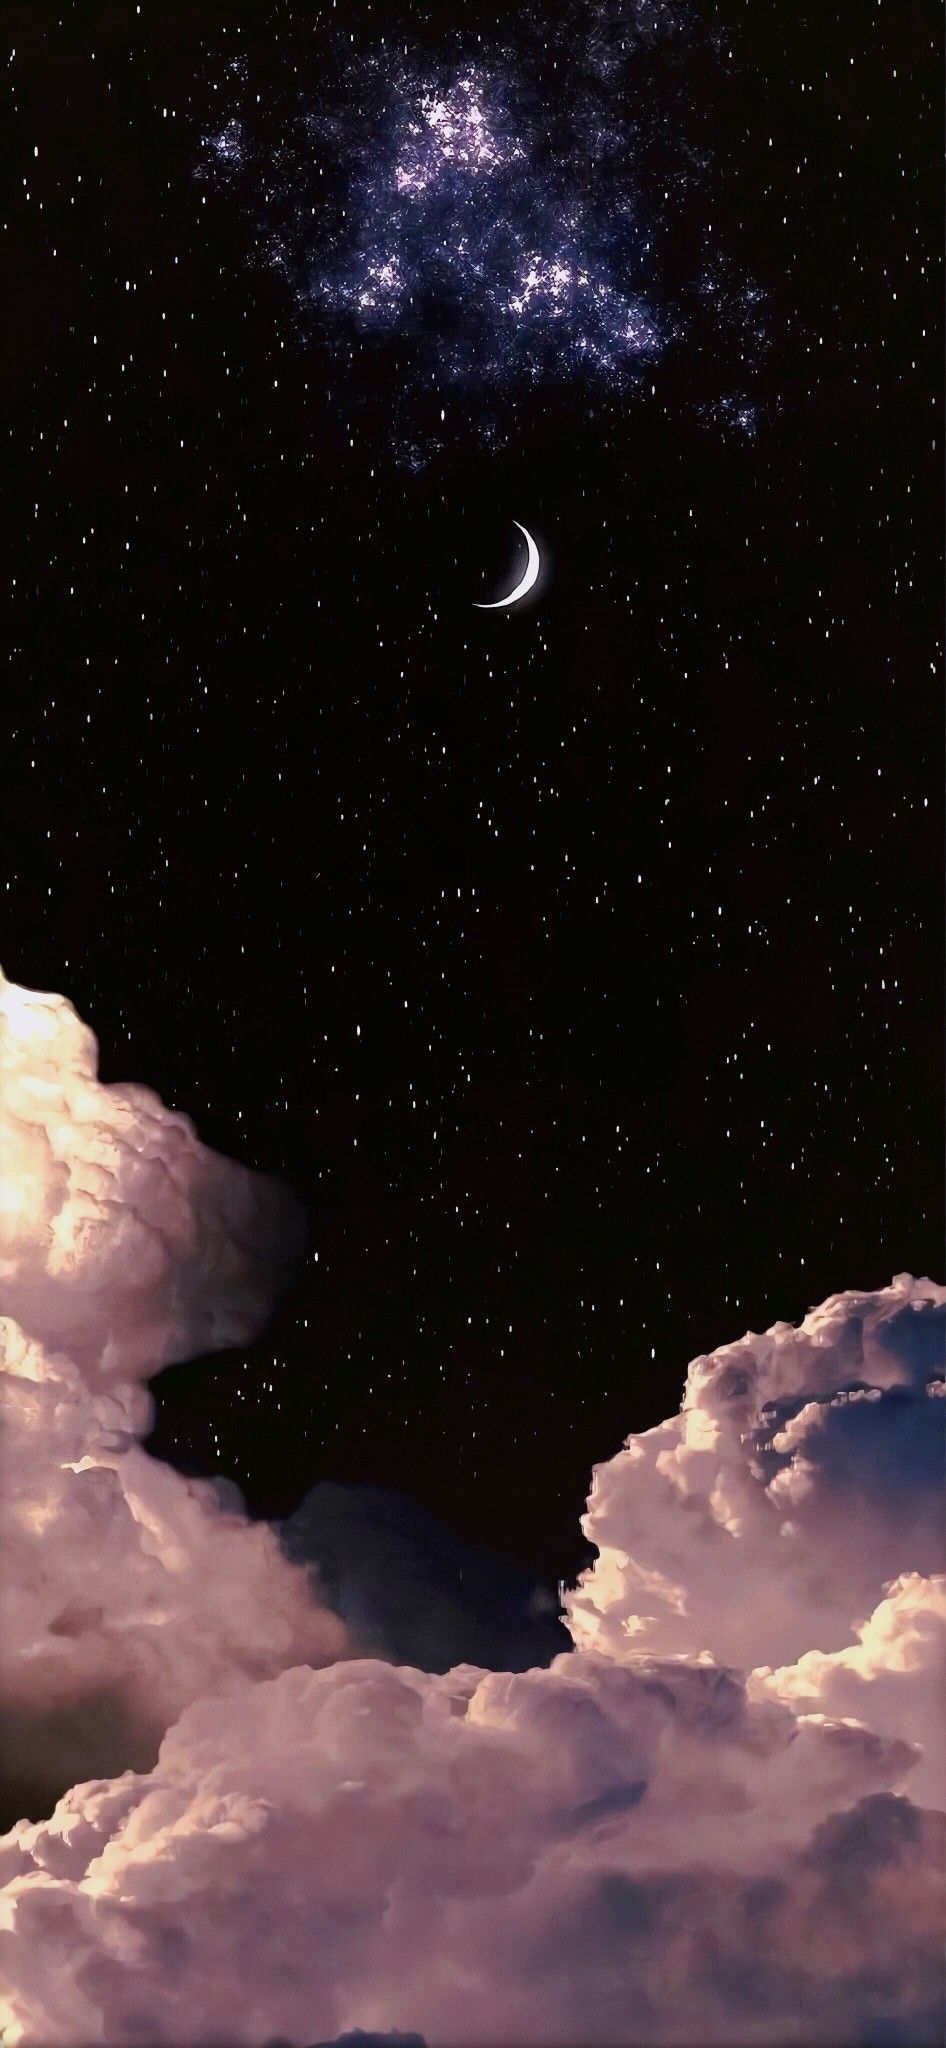 Billions Stars in The Night Sky 4K wallpaper download